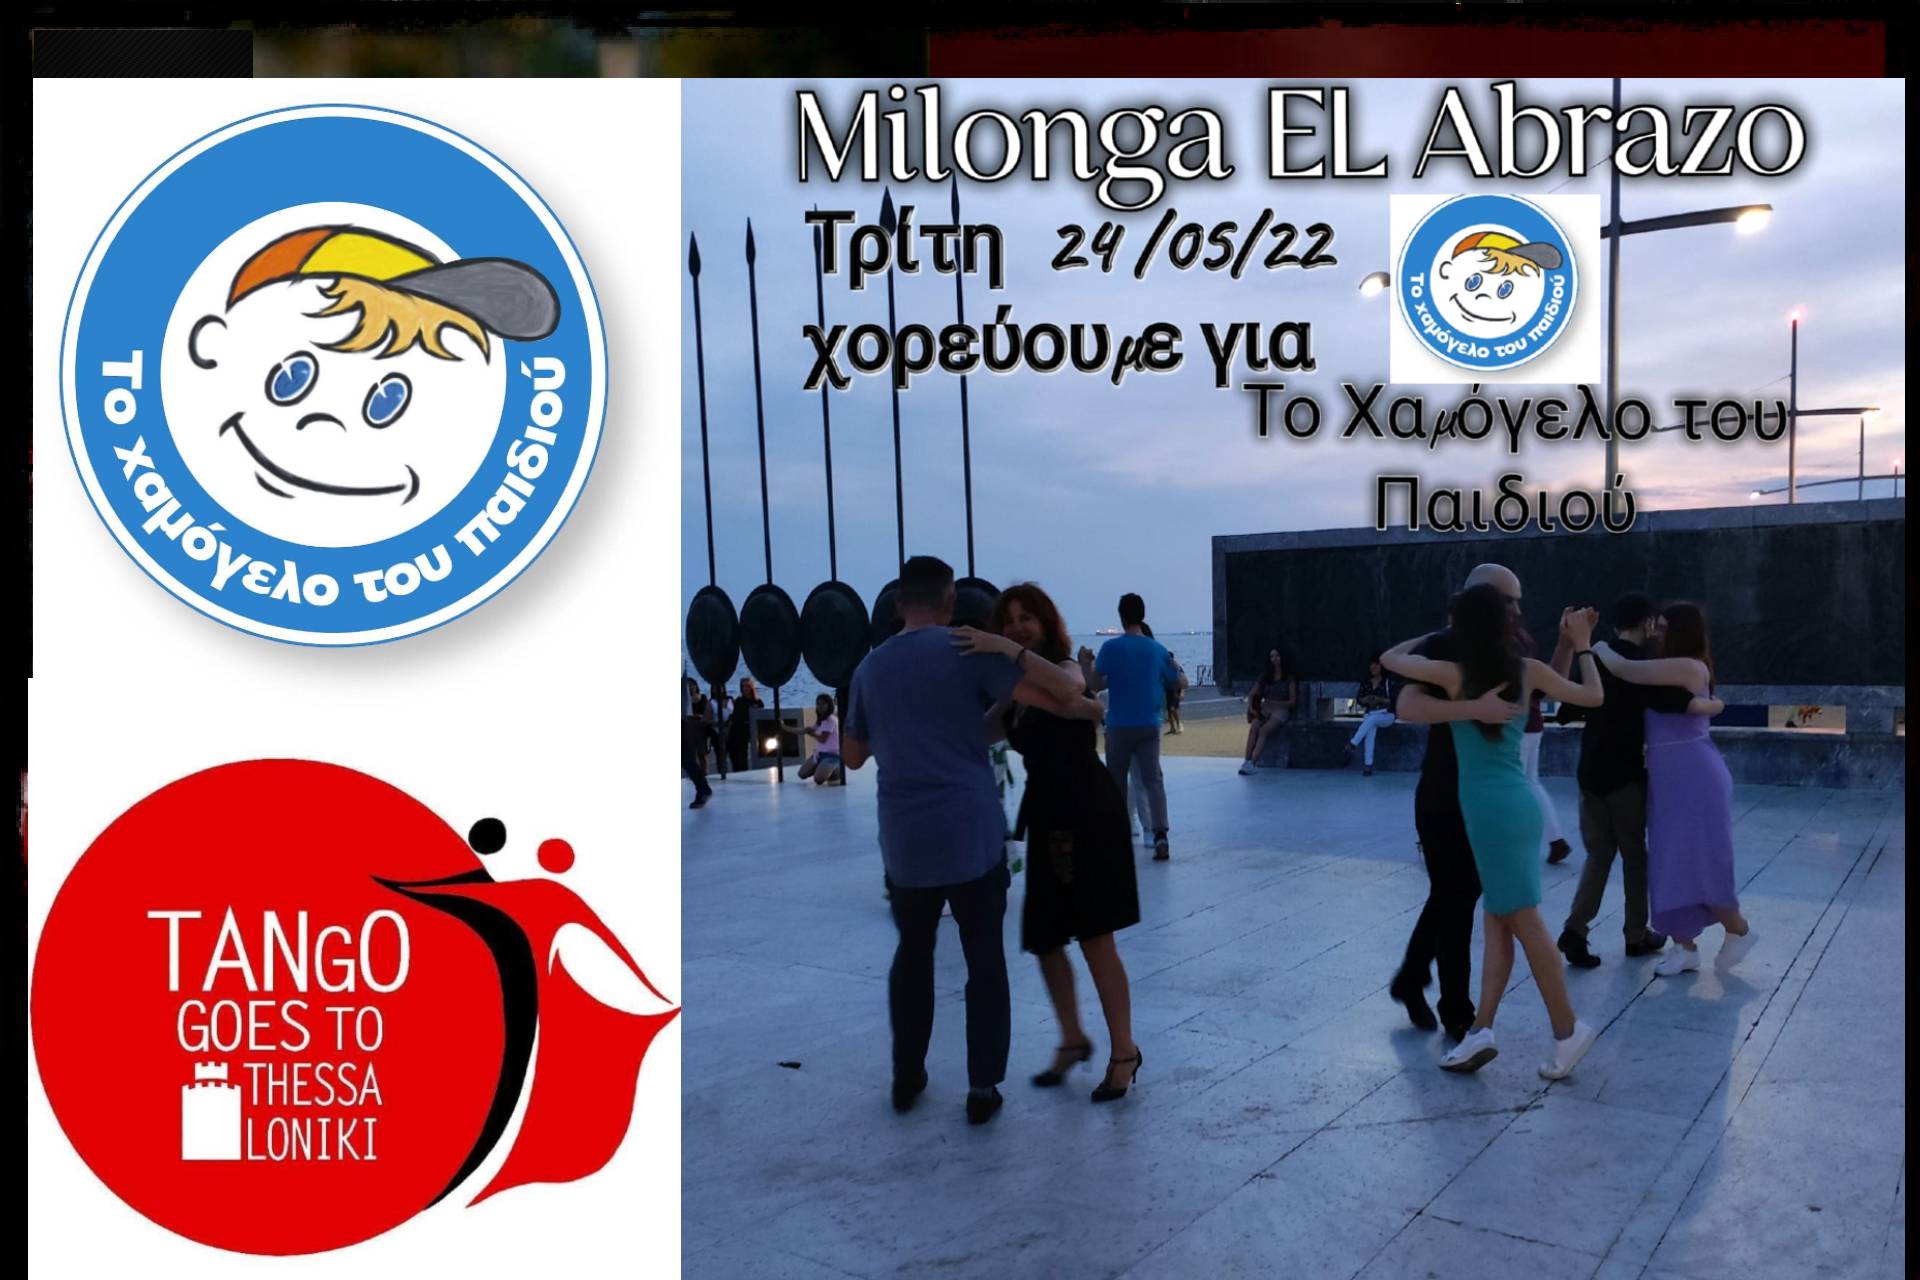 Milonga el Abrazo | Χορεύουμε και στηρίζουμε το χαμόγελο του παιδιού